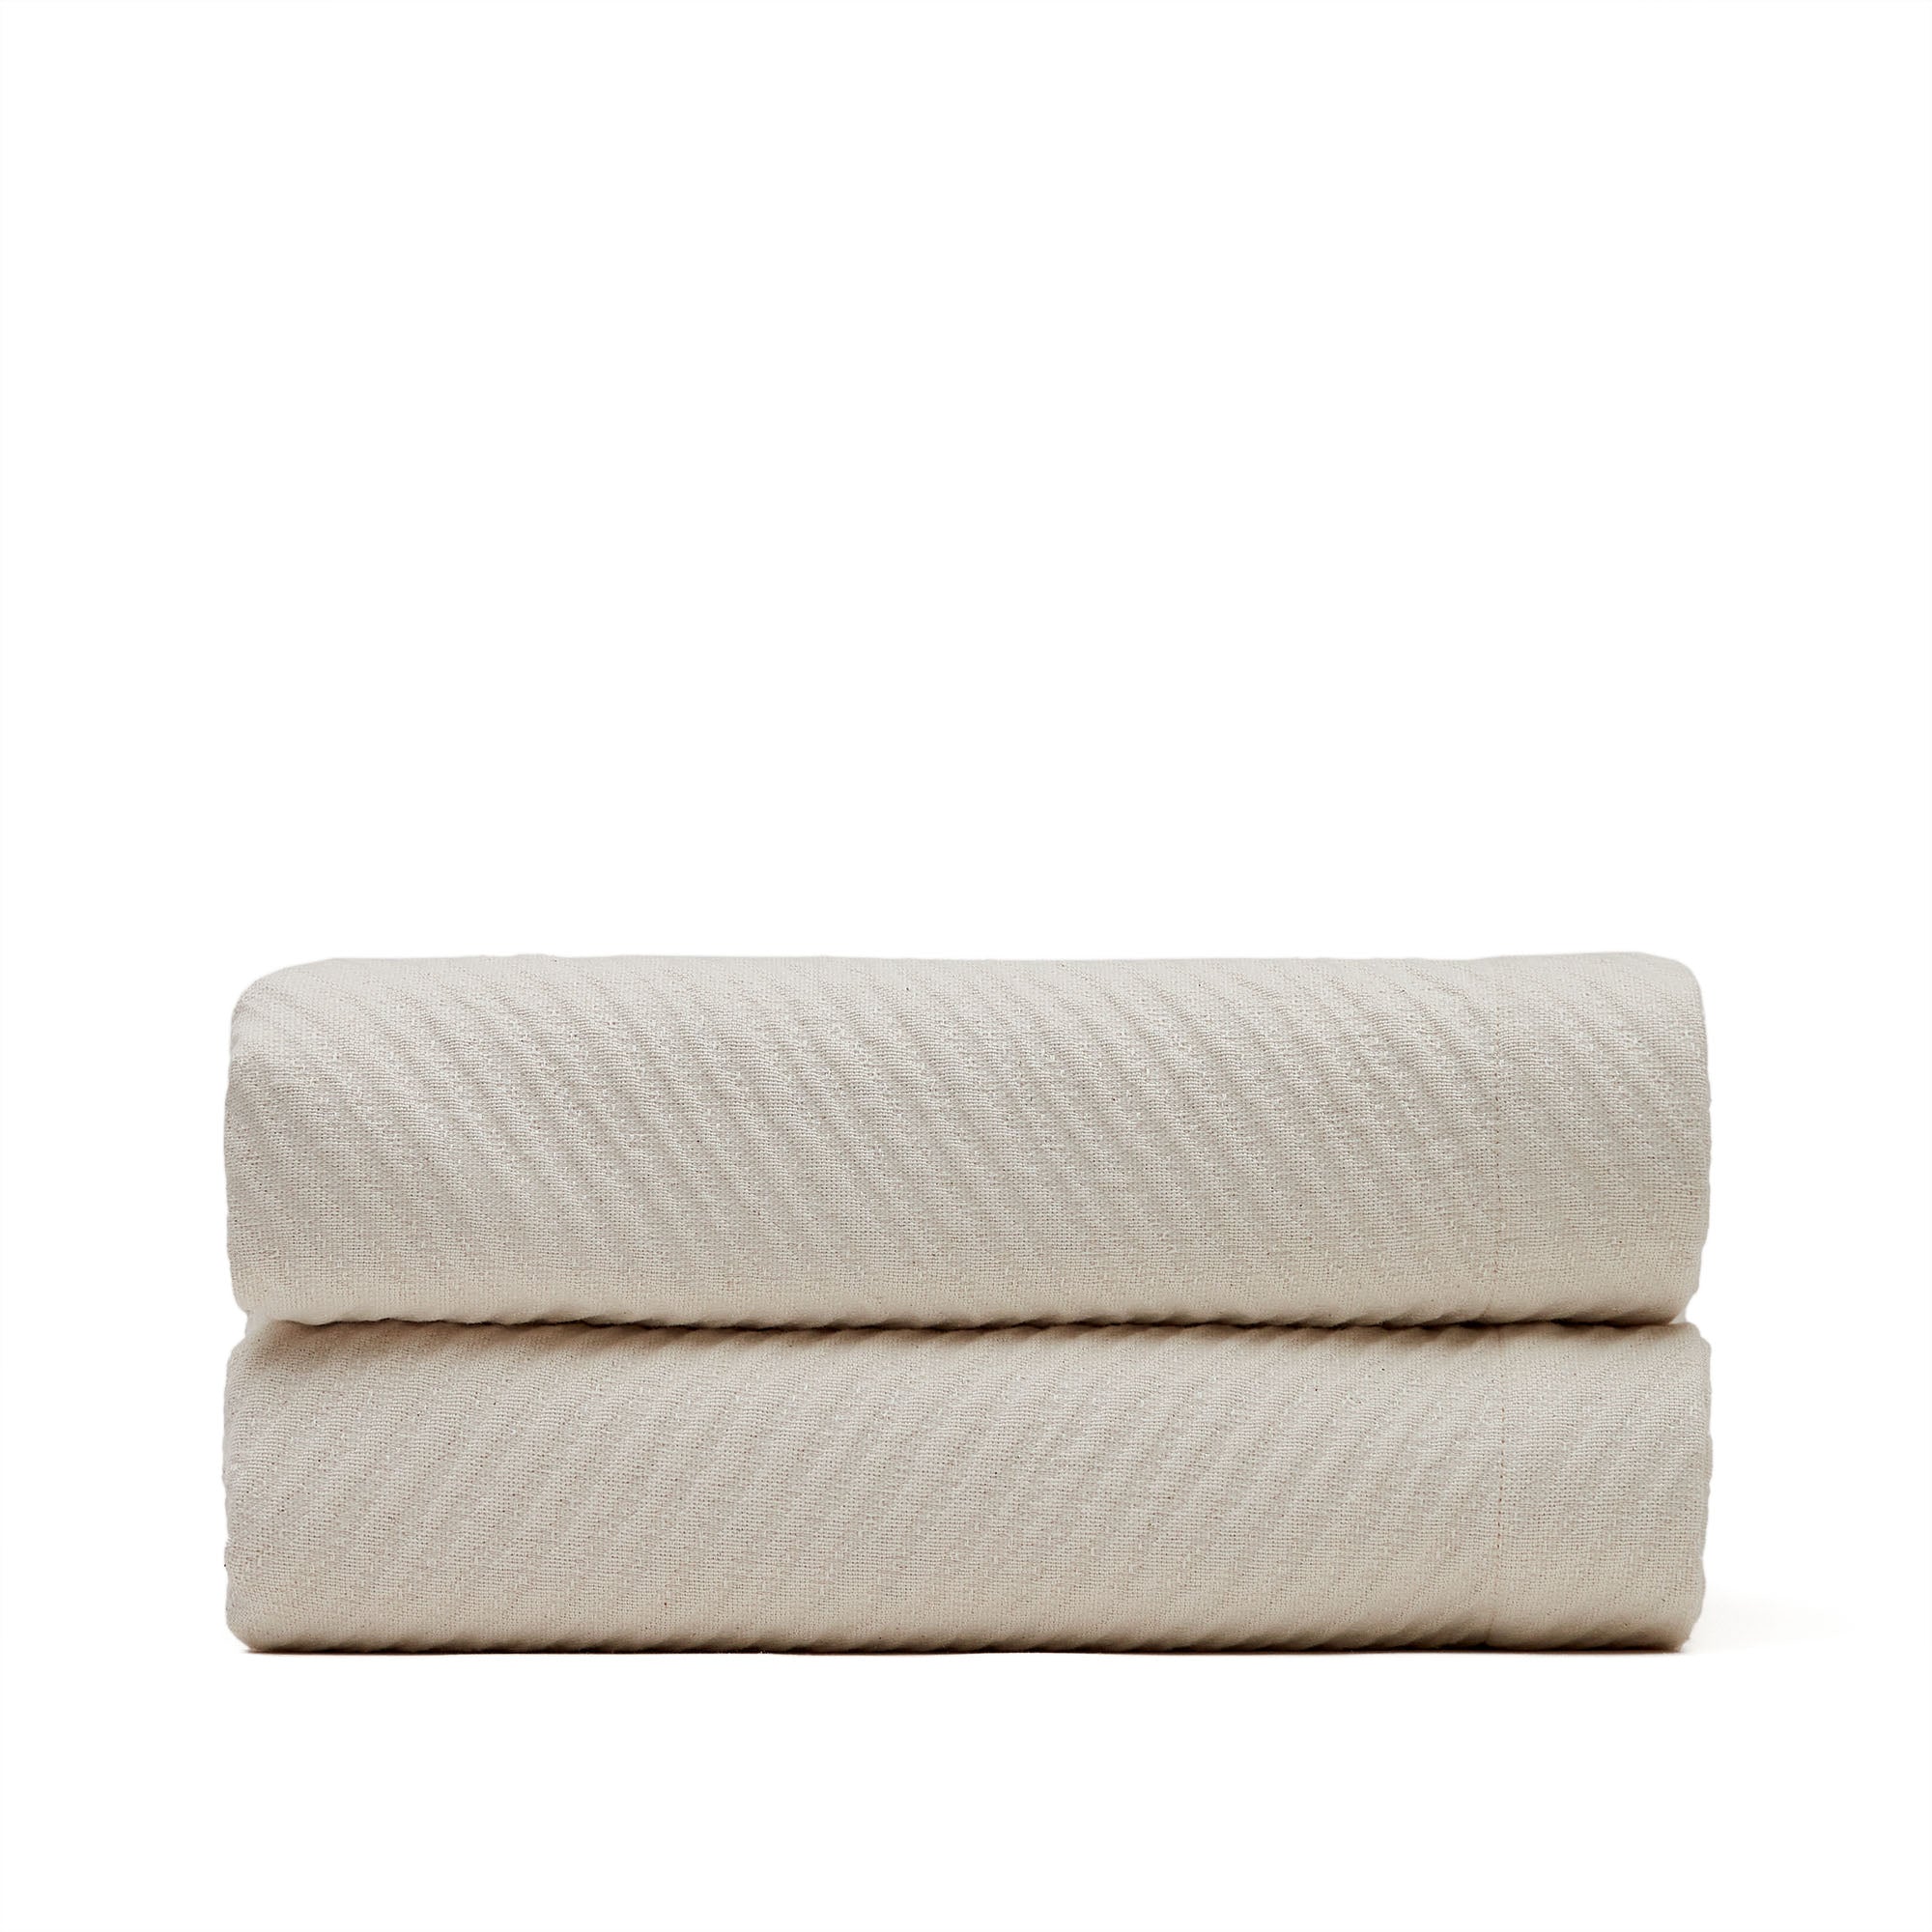 Berga quilt in beige cotton for 180/200 cm bed